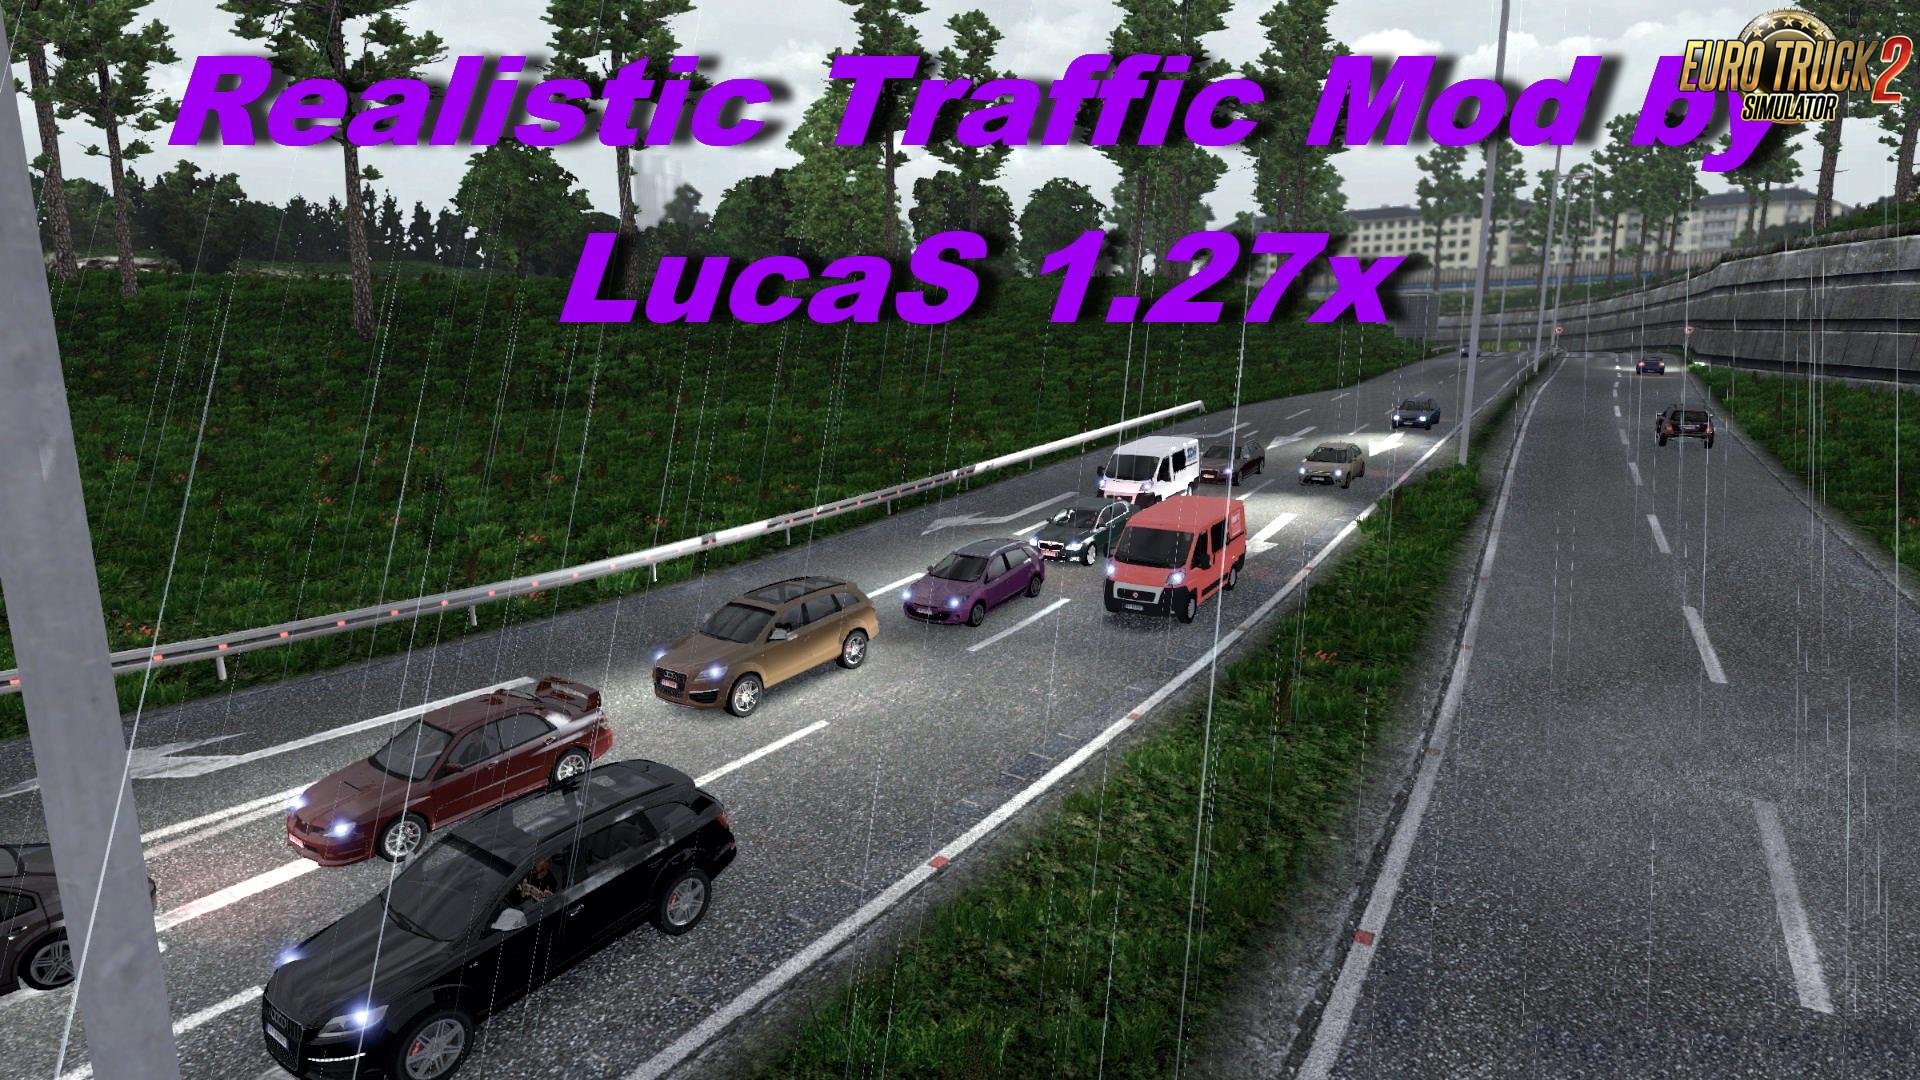 Realistic Traffic Mod v1.0 by Lucas (1.27.x)